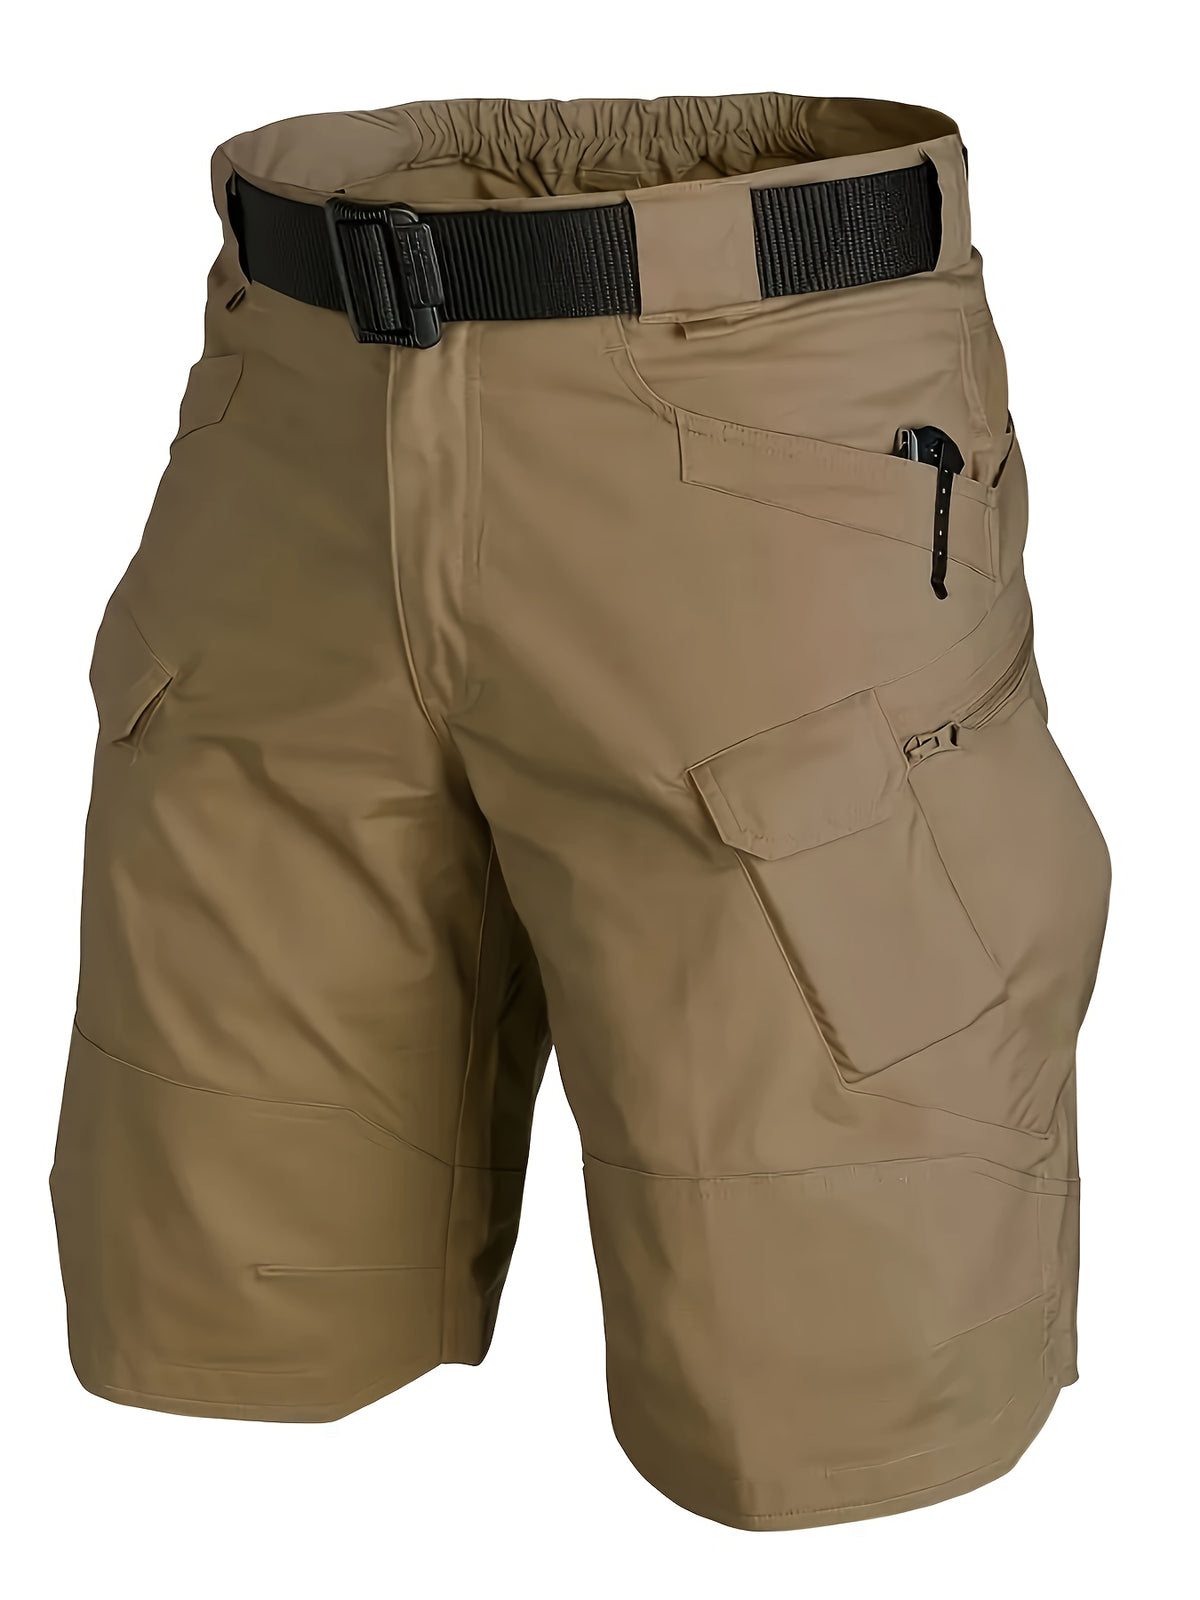 Men's Multi-Pocket Tactical Shorts  Multi-Purpose Cargo Shorts Outdoor Waterproof Hiking Track Shorts Cykapu